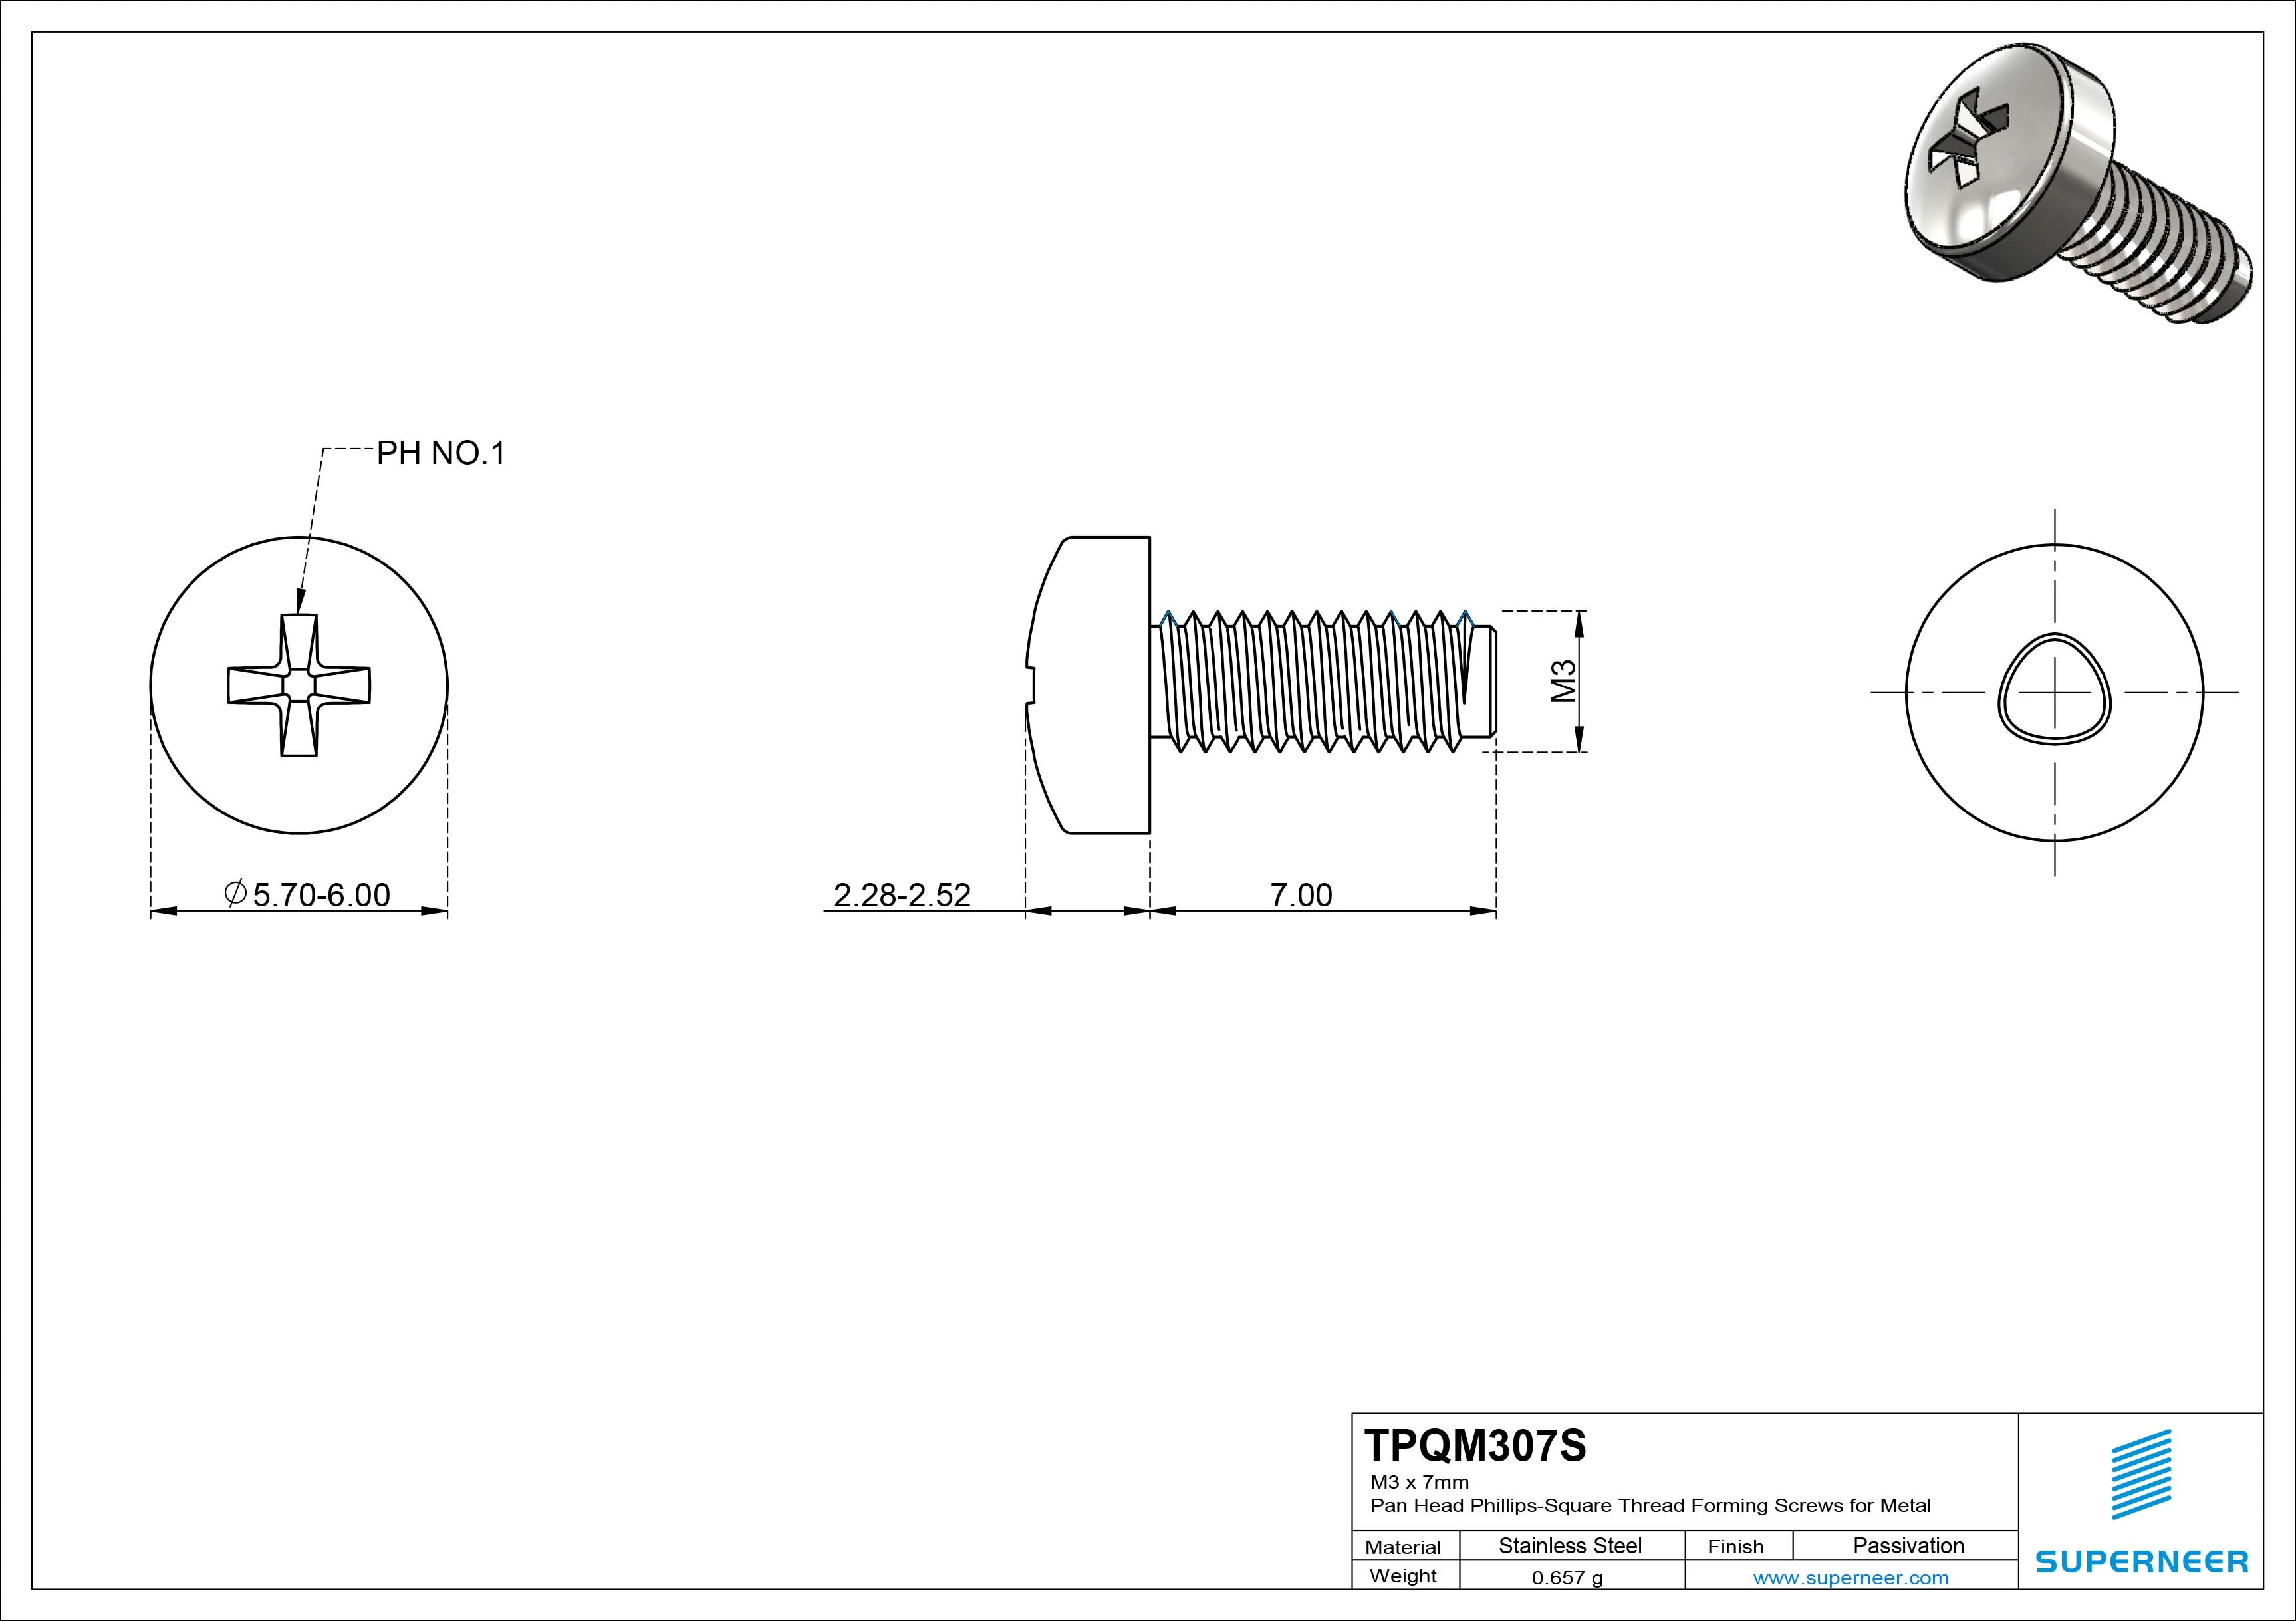 M3 × 7mm Pan Head Phillips-Square Thread Forming Screws for Metal SUS304 Stainless Steel Inox